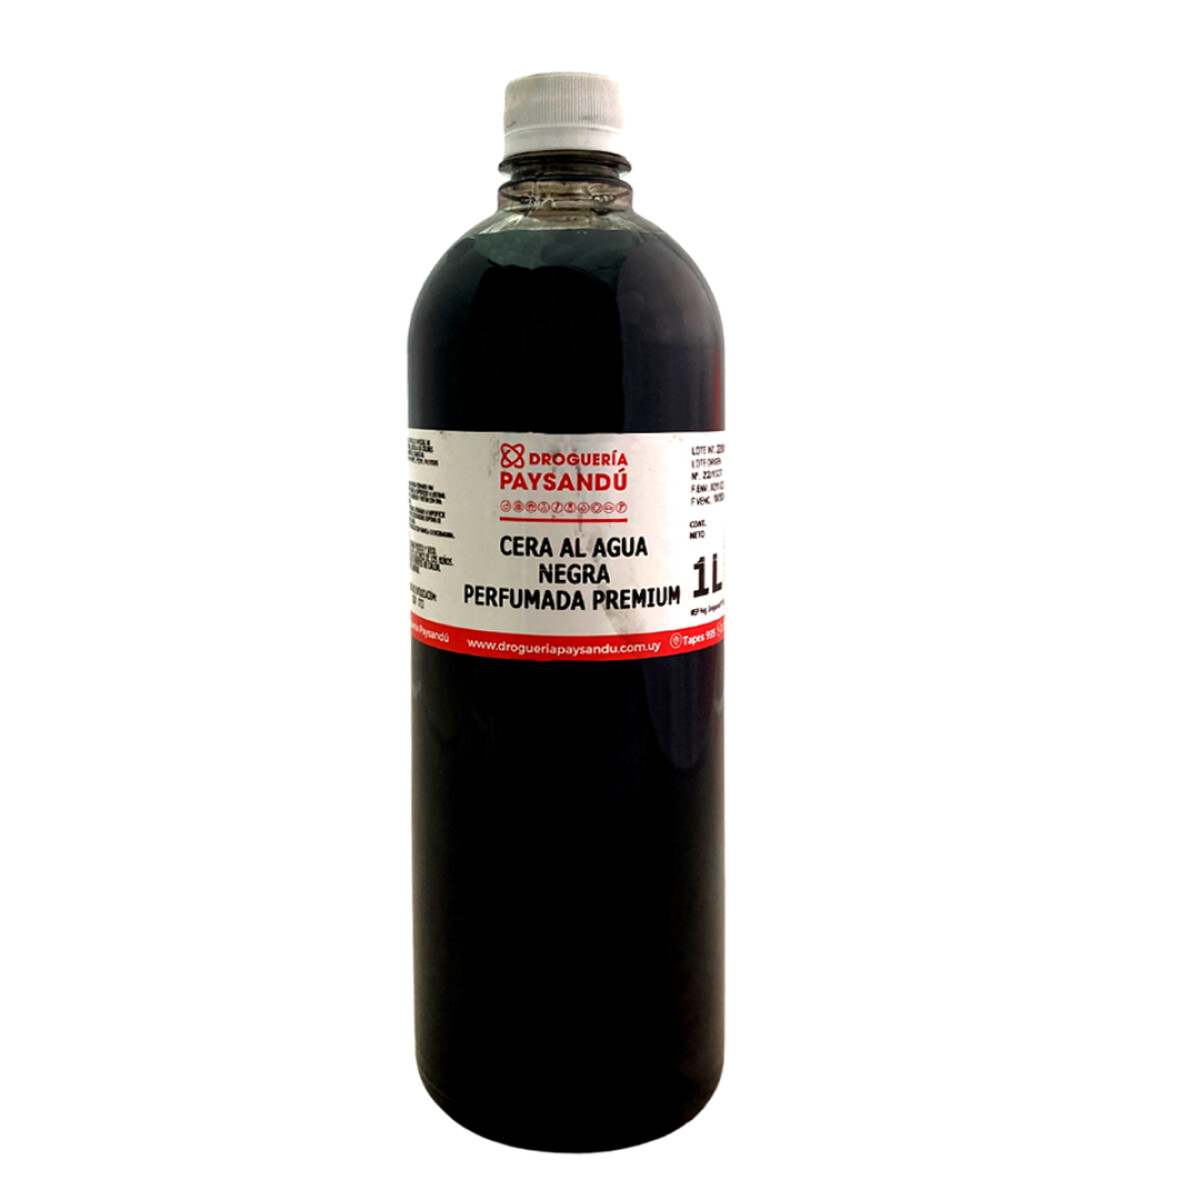 Cera al agua negra perfumada premium 1 L 